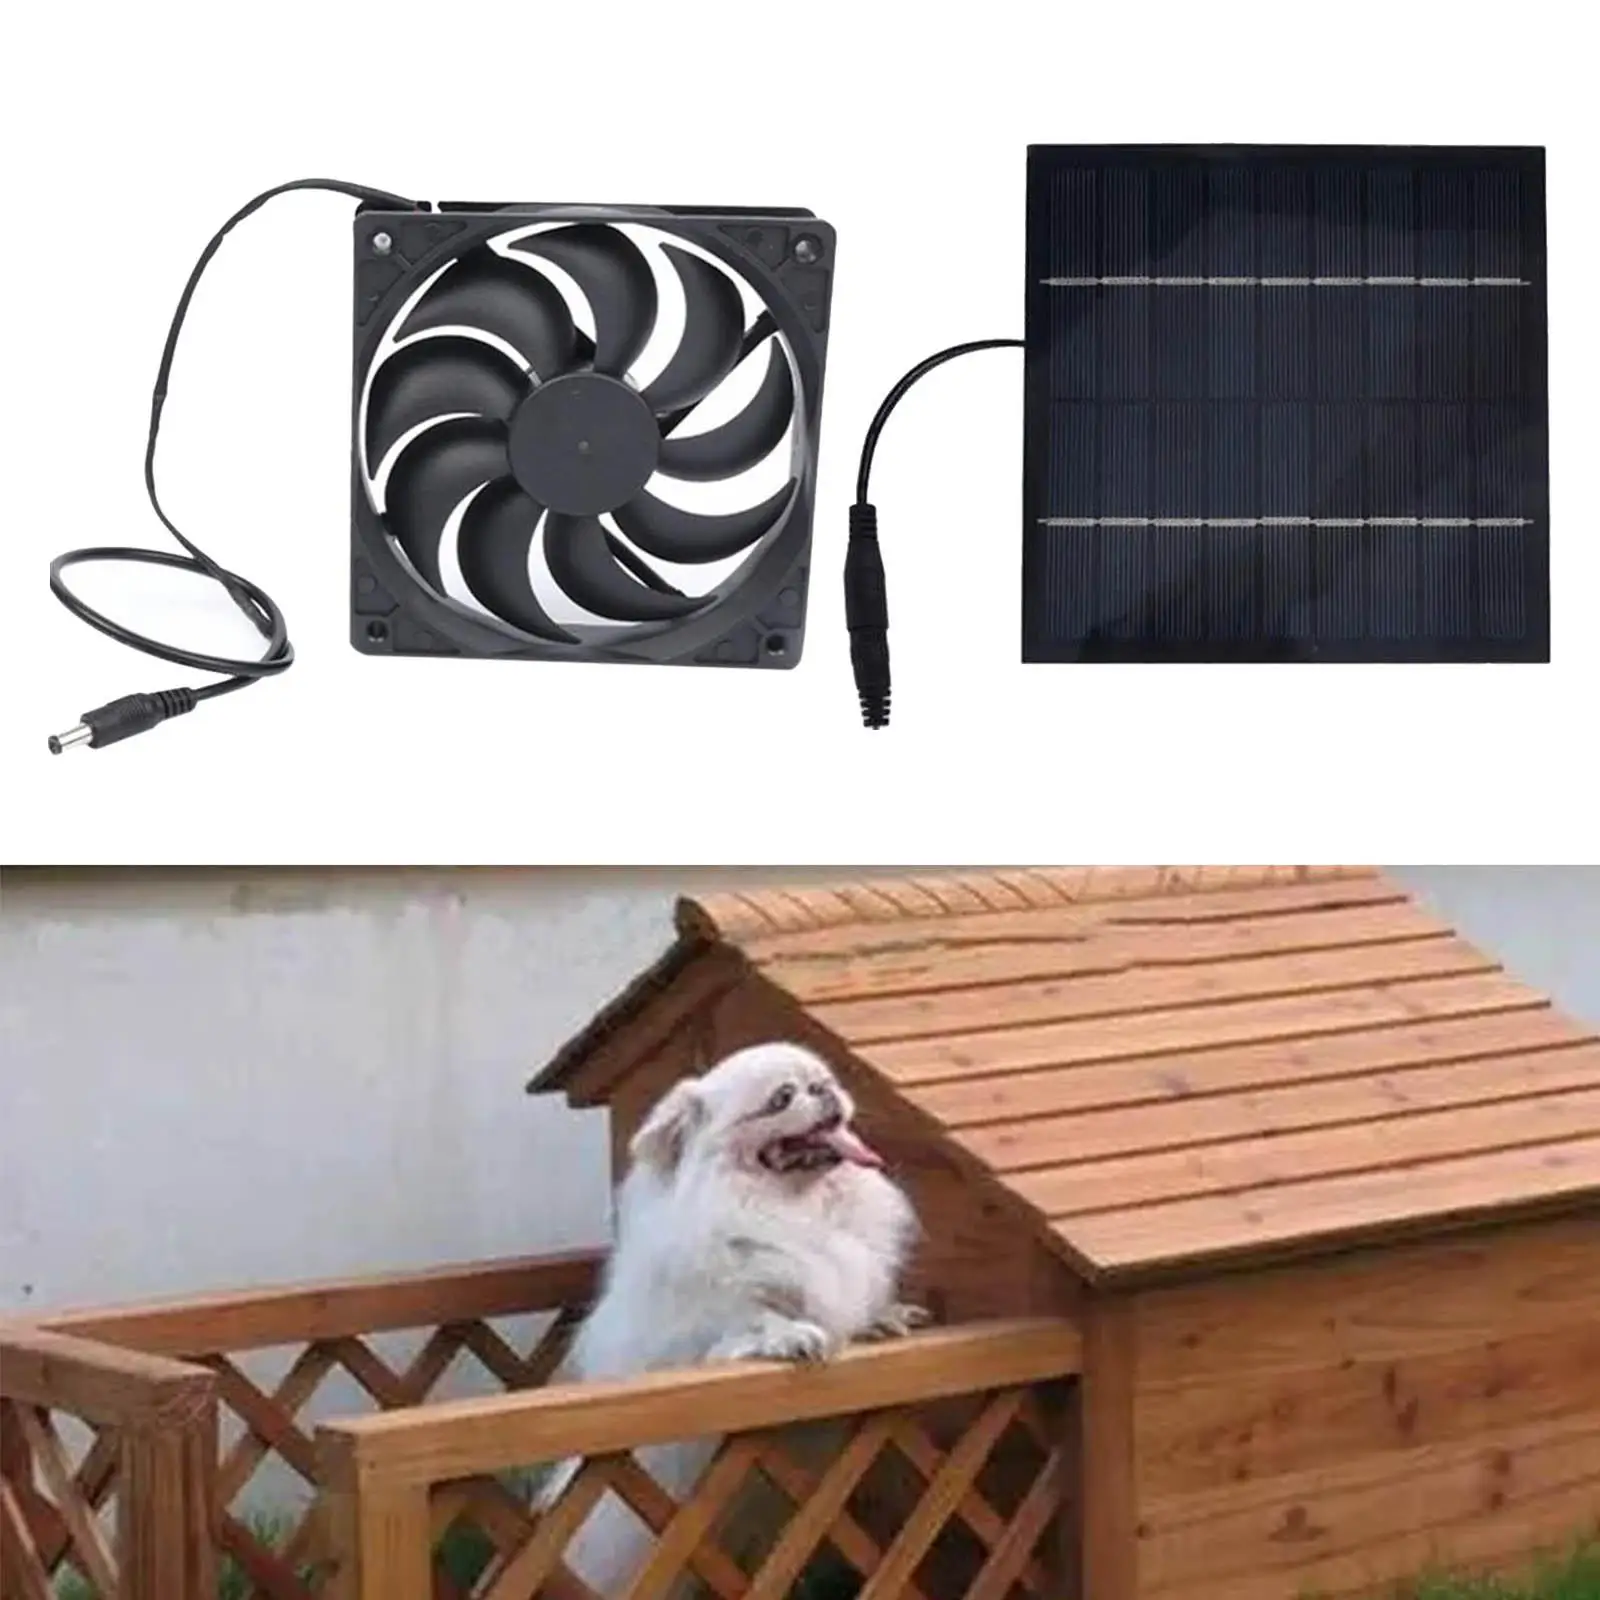  Saving Solar Powered Panel Fan, Solar Panel Powered Ventilator Fans for Camping